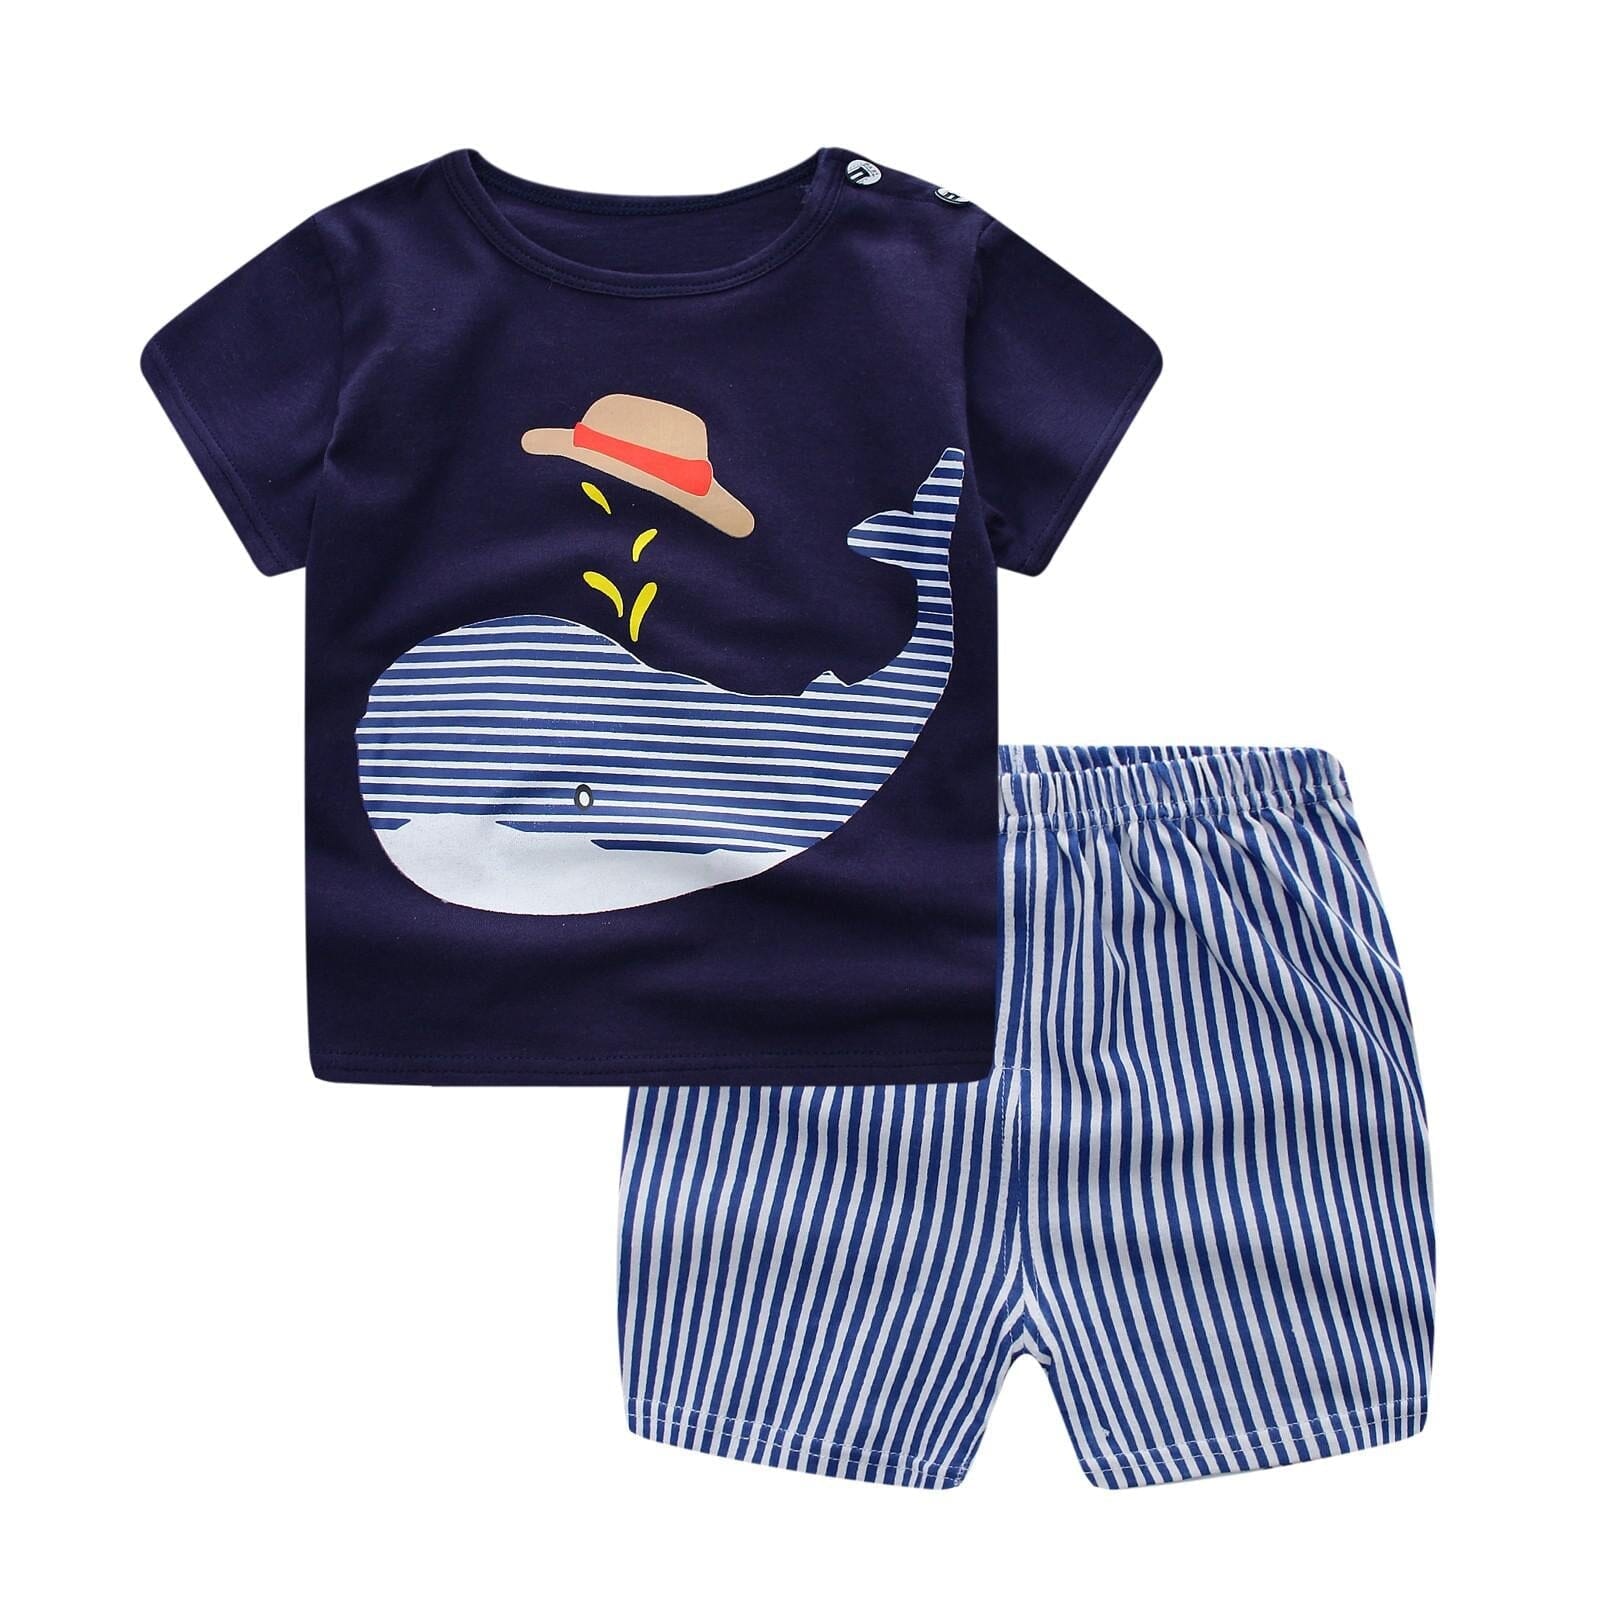 Cotton Leisure Set for Baby Boys: T-shirt + Shorts - RoniCorn